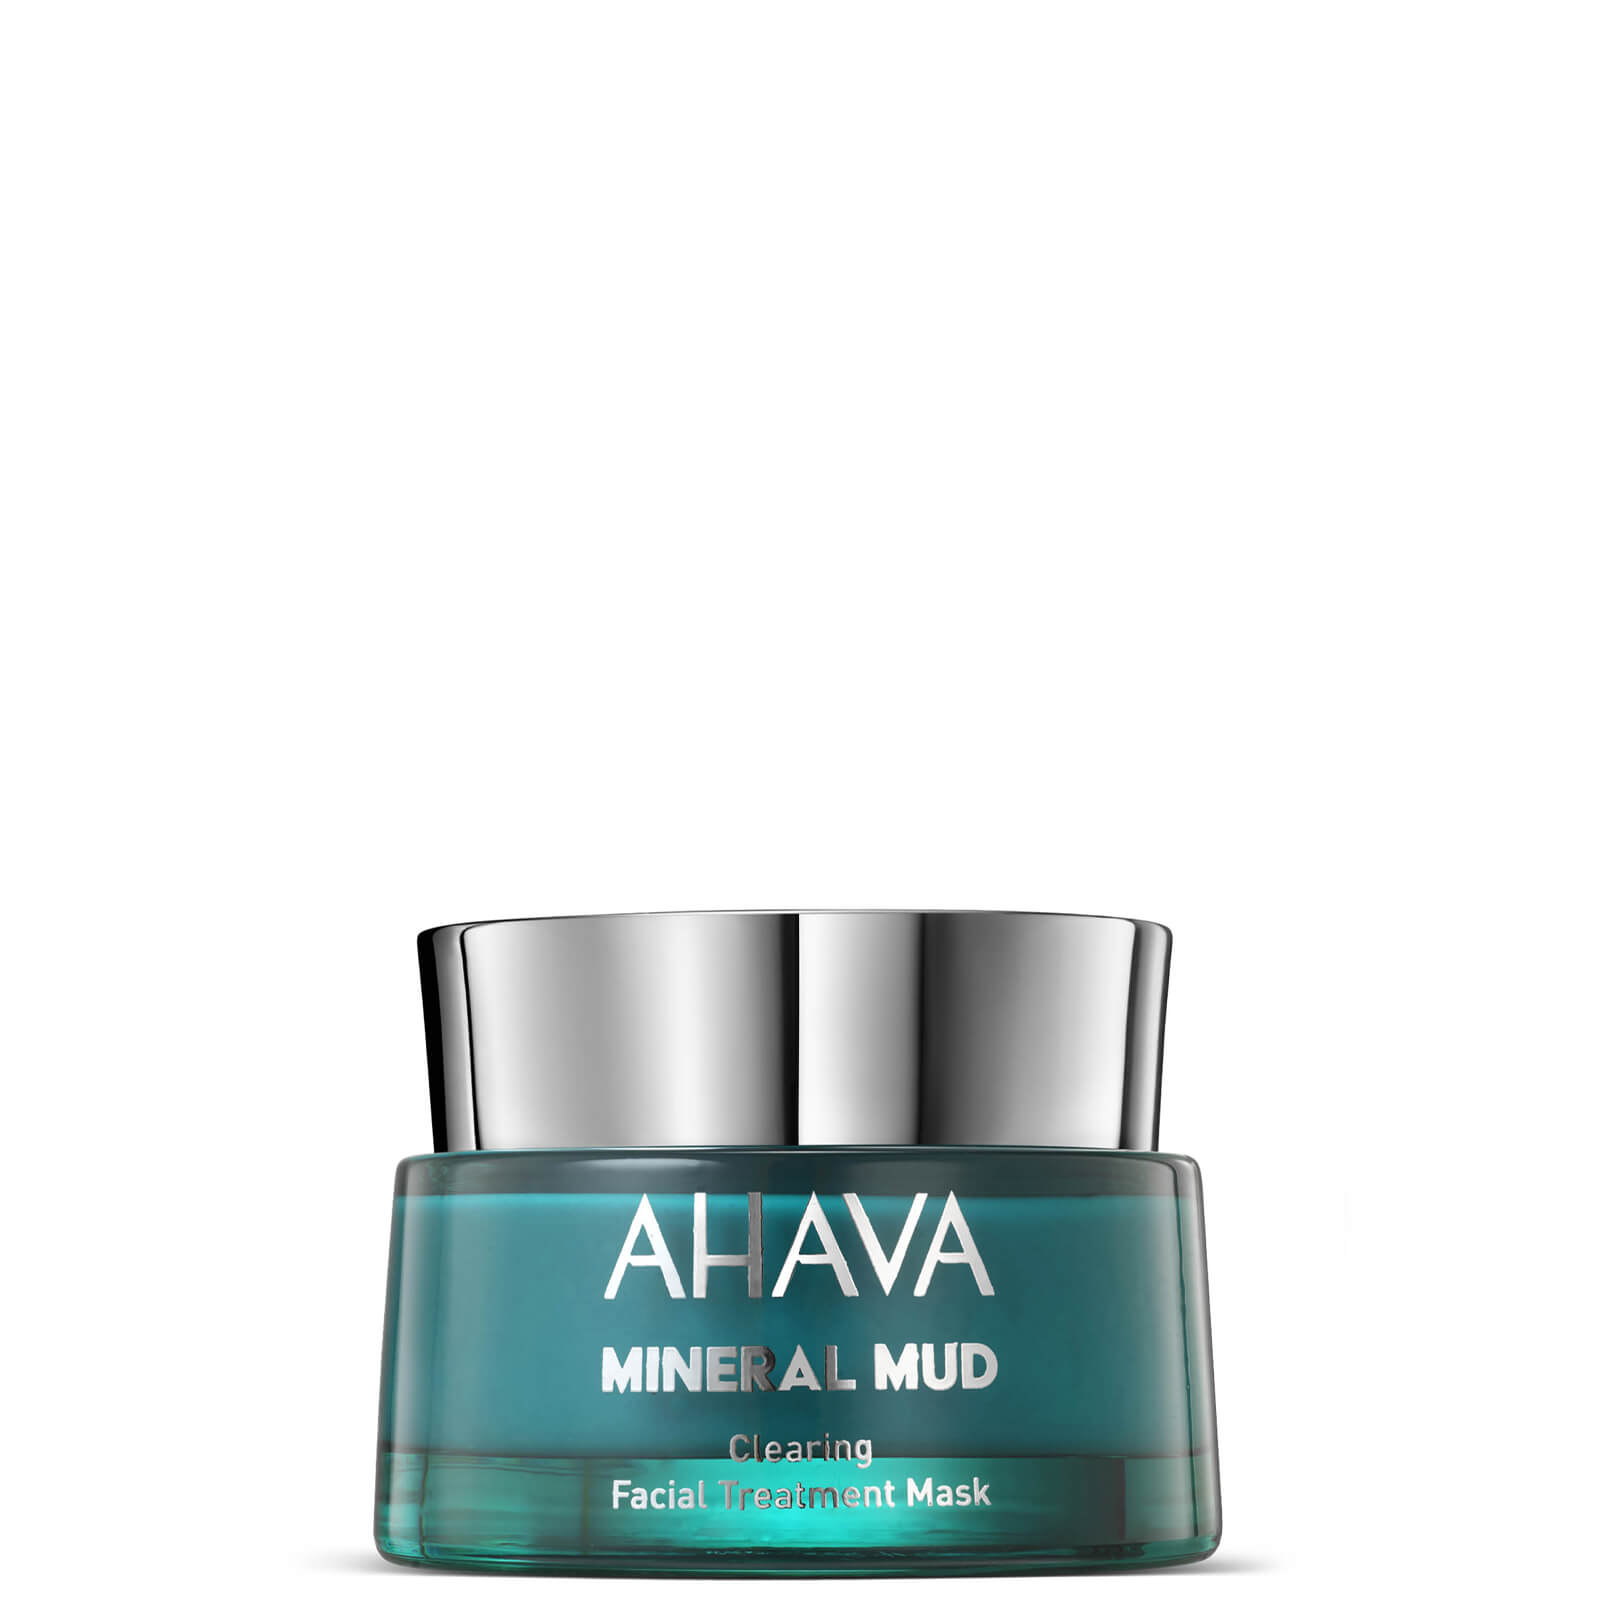 Image of AHAVA Clearing Facial Treatment Mask 50ml